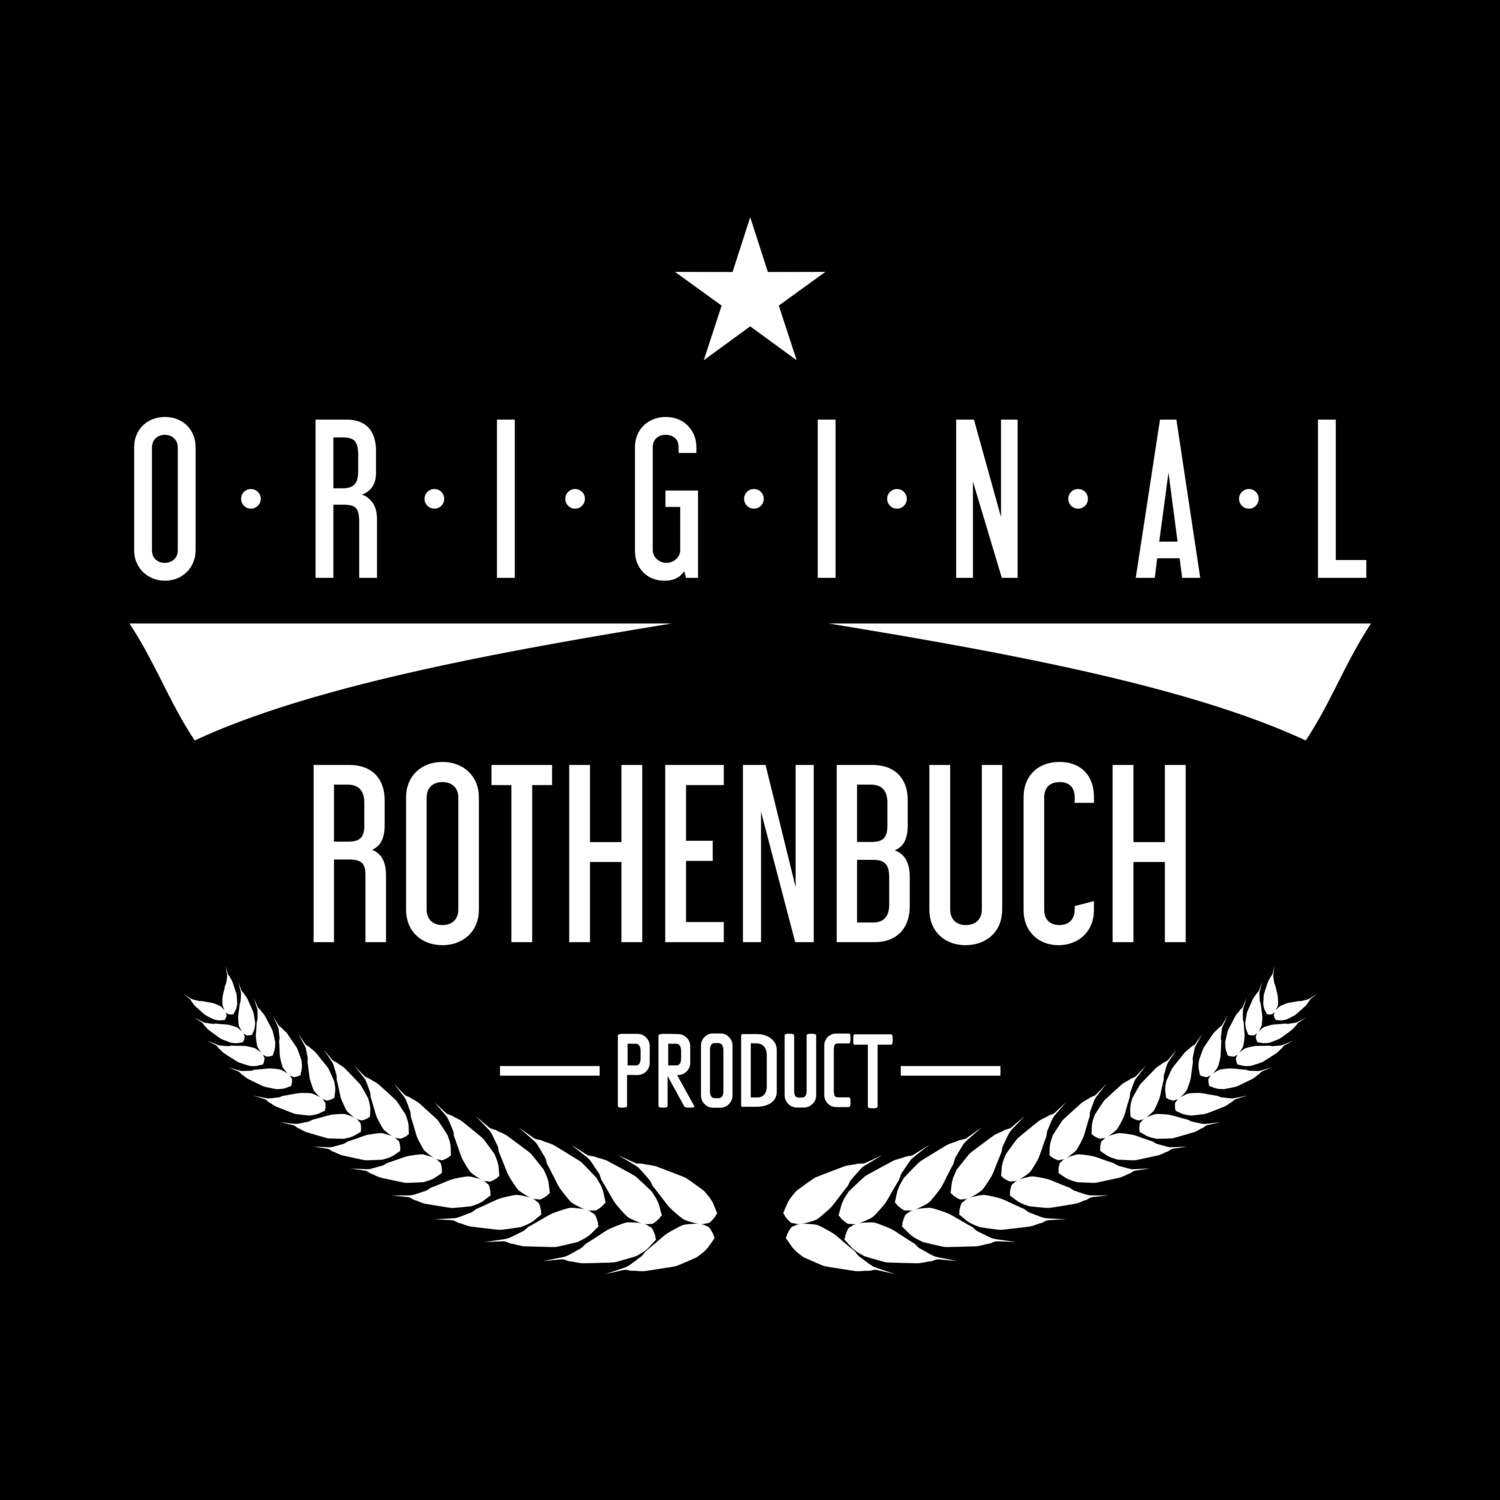 Rothenbuch T-Shirt »Original Product«